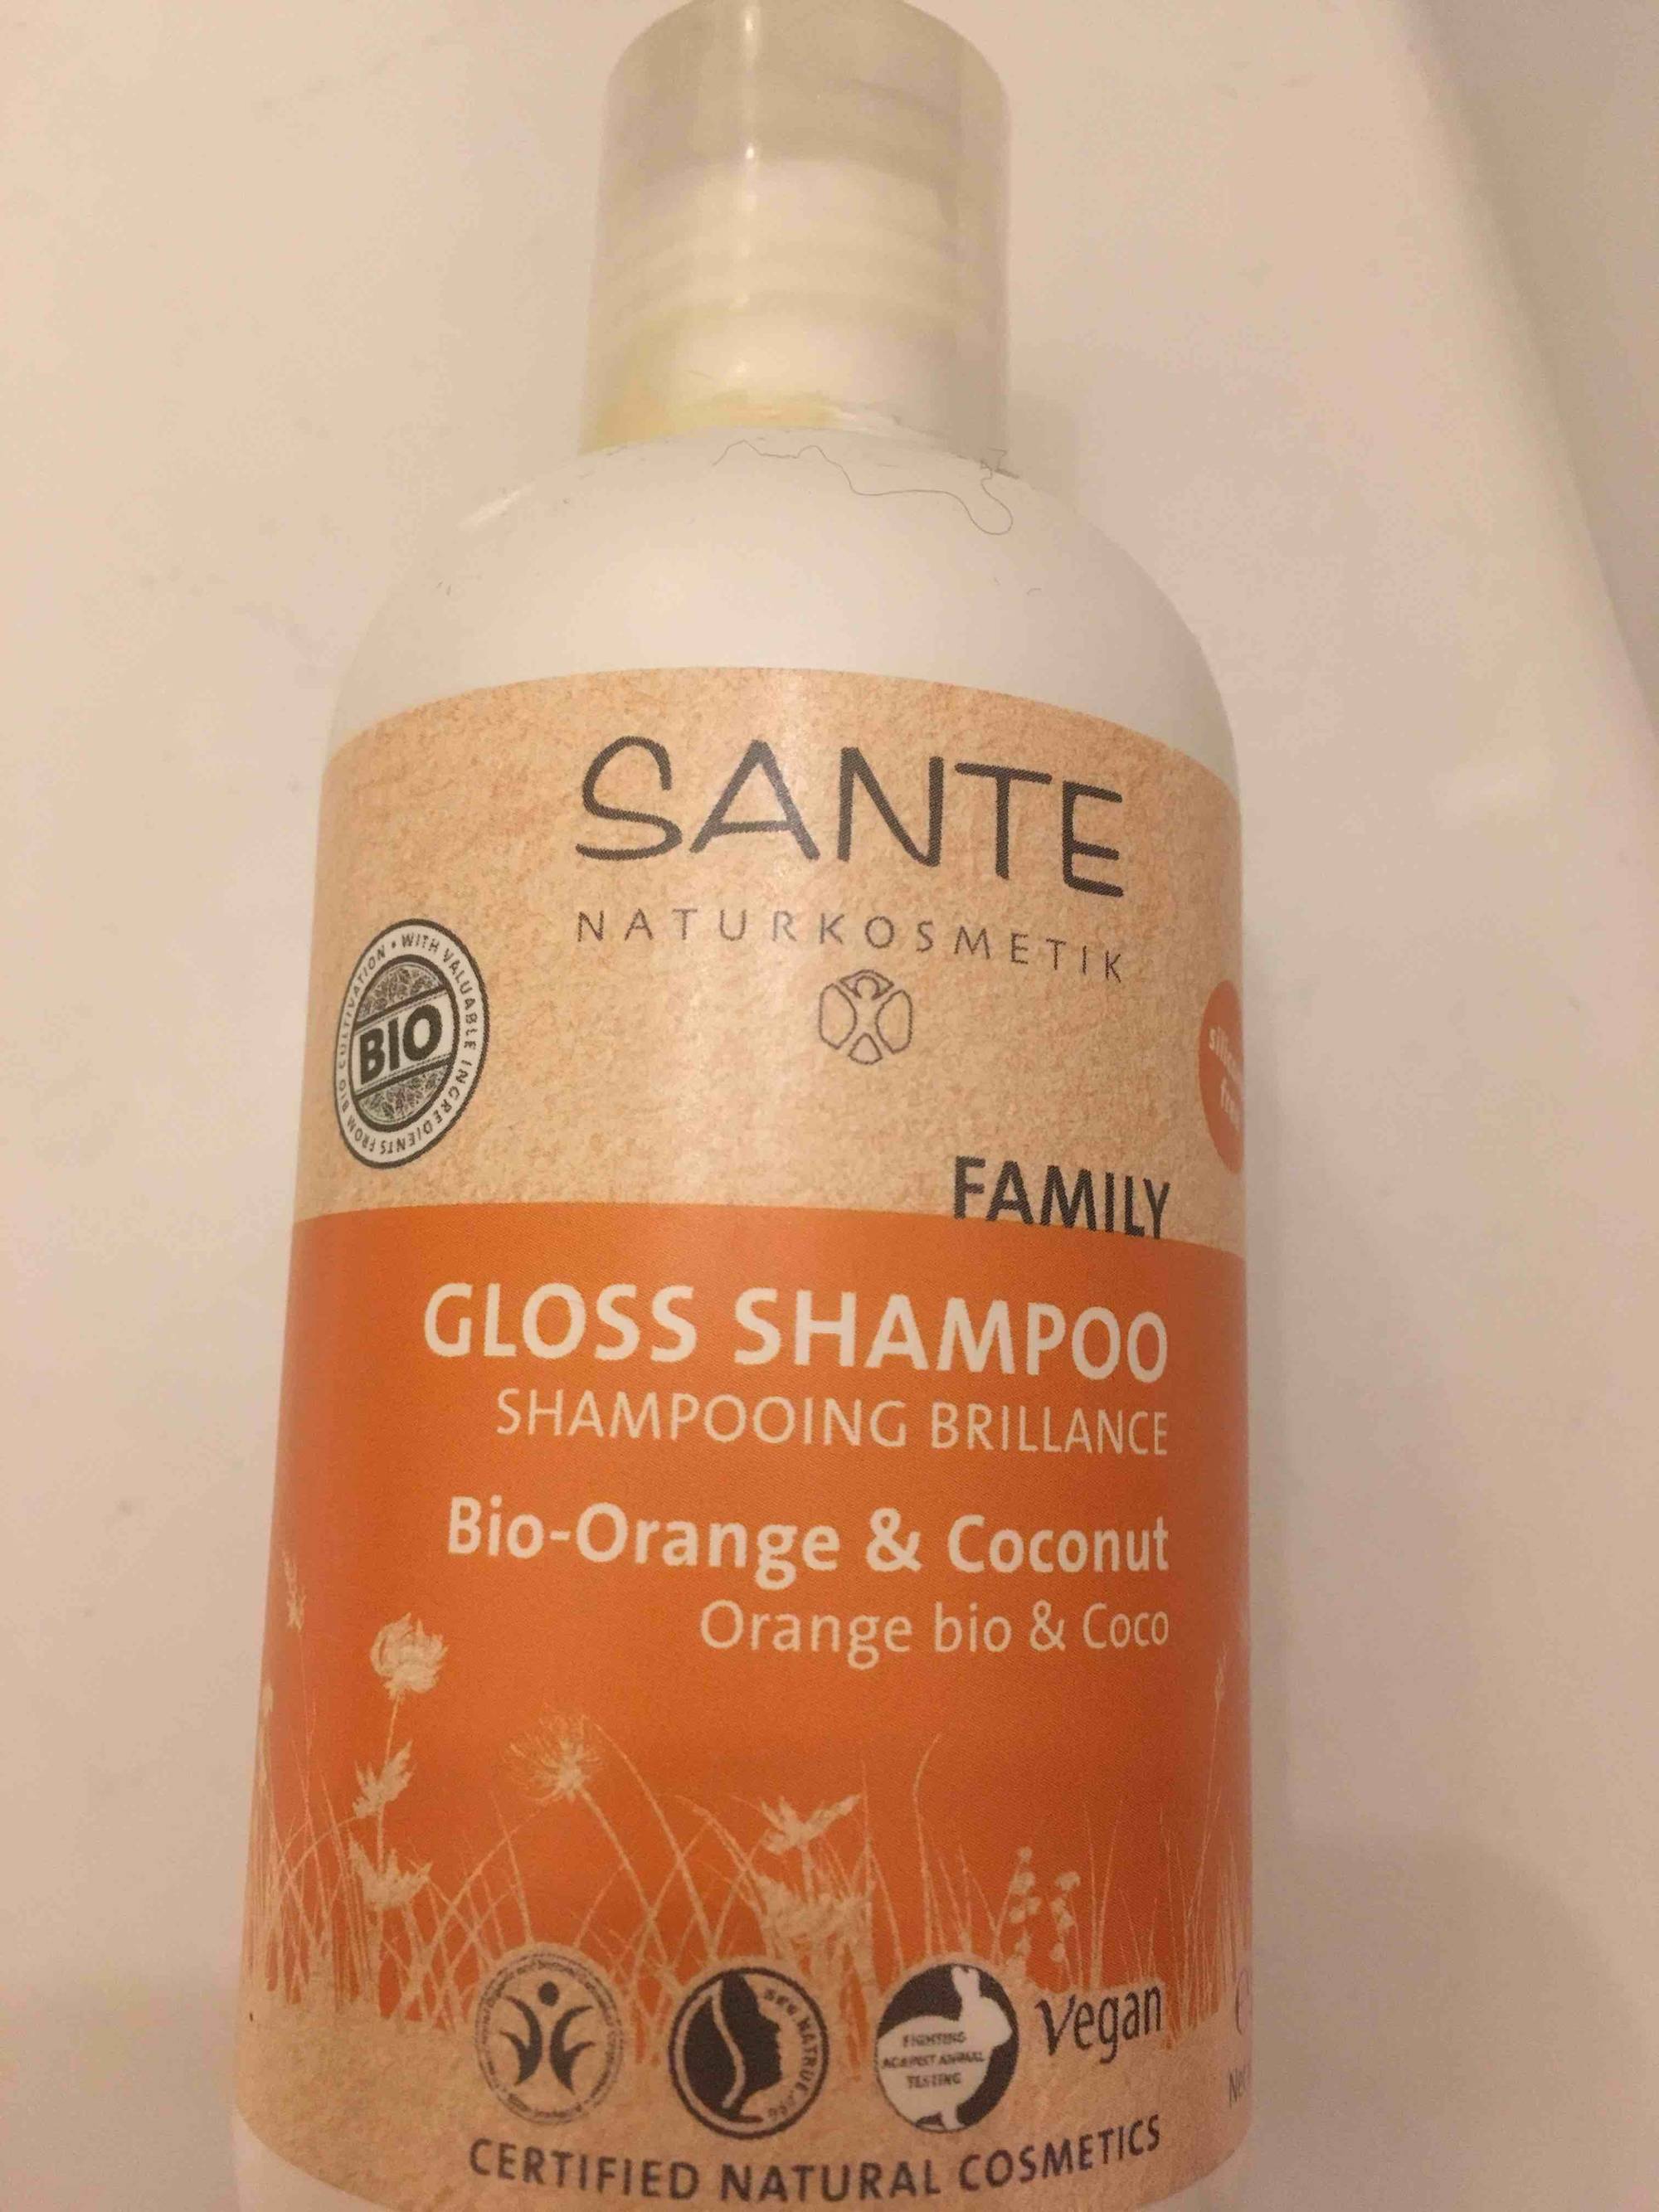 SANTE NATURKOSMETIK - Family - Shampooing brillance à l'Orange bio & Coco